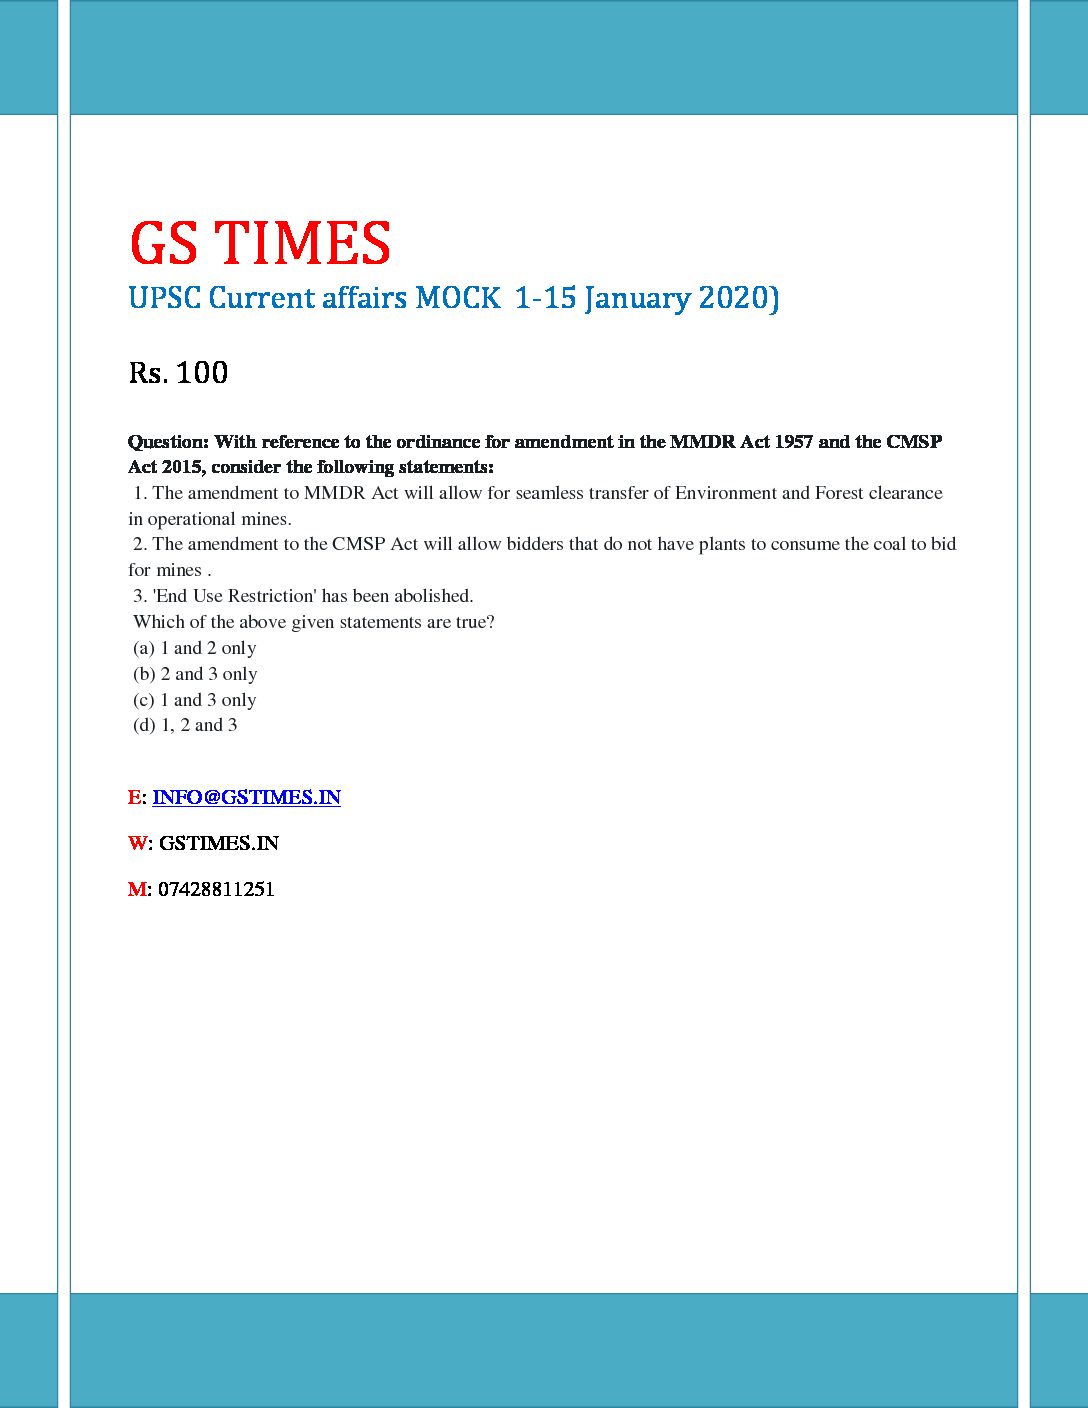 UPSC PT 2020 Current Based General Studies-1 Mock 1-15 January 2020 English